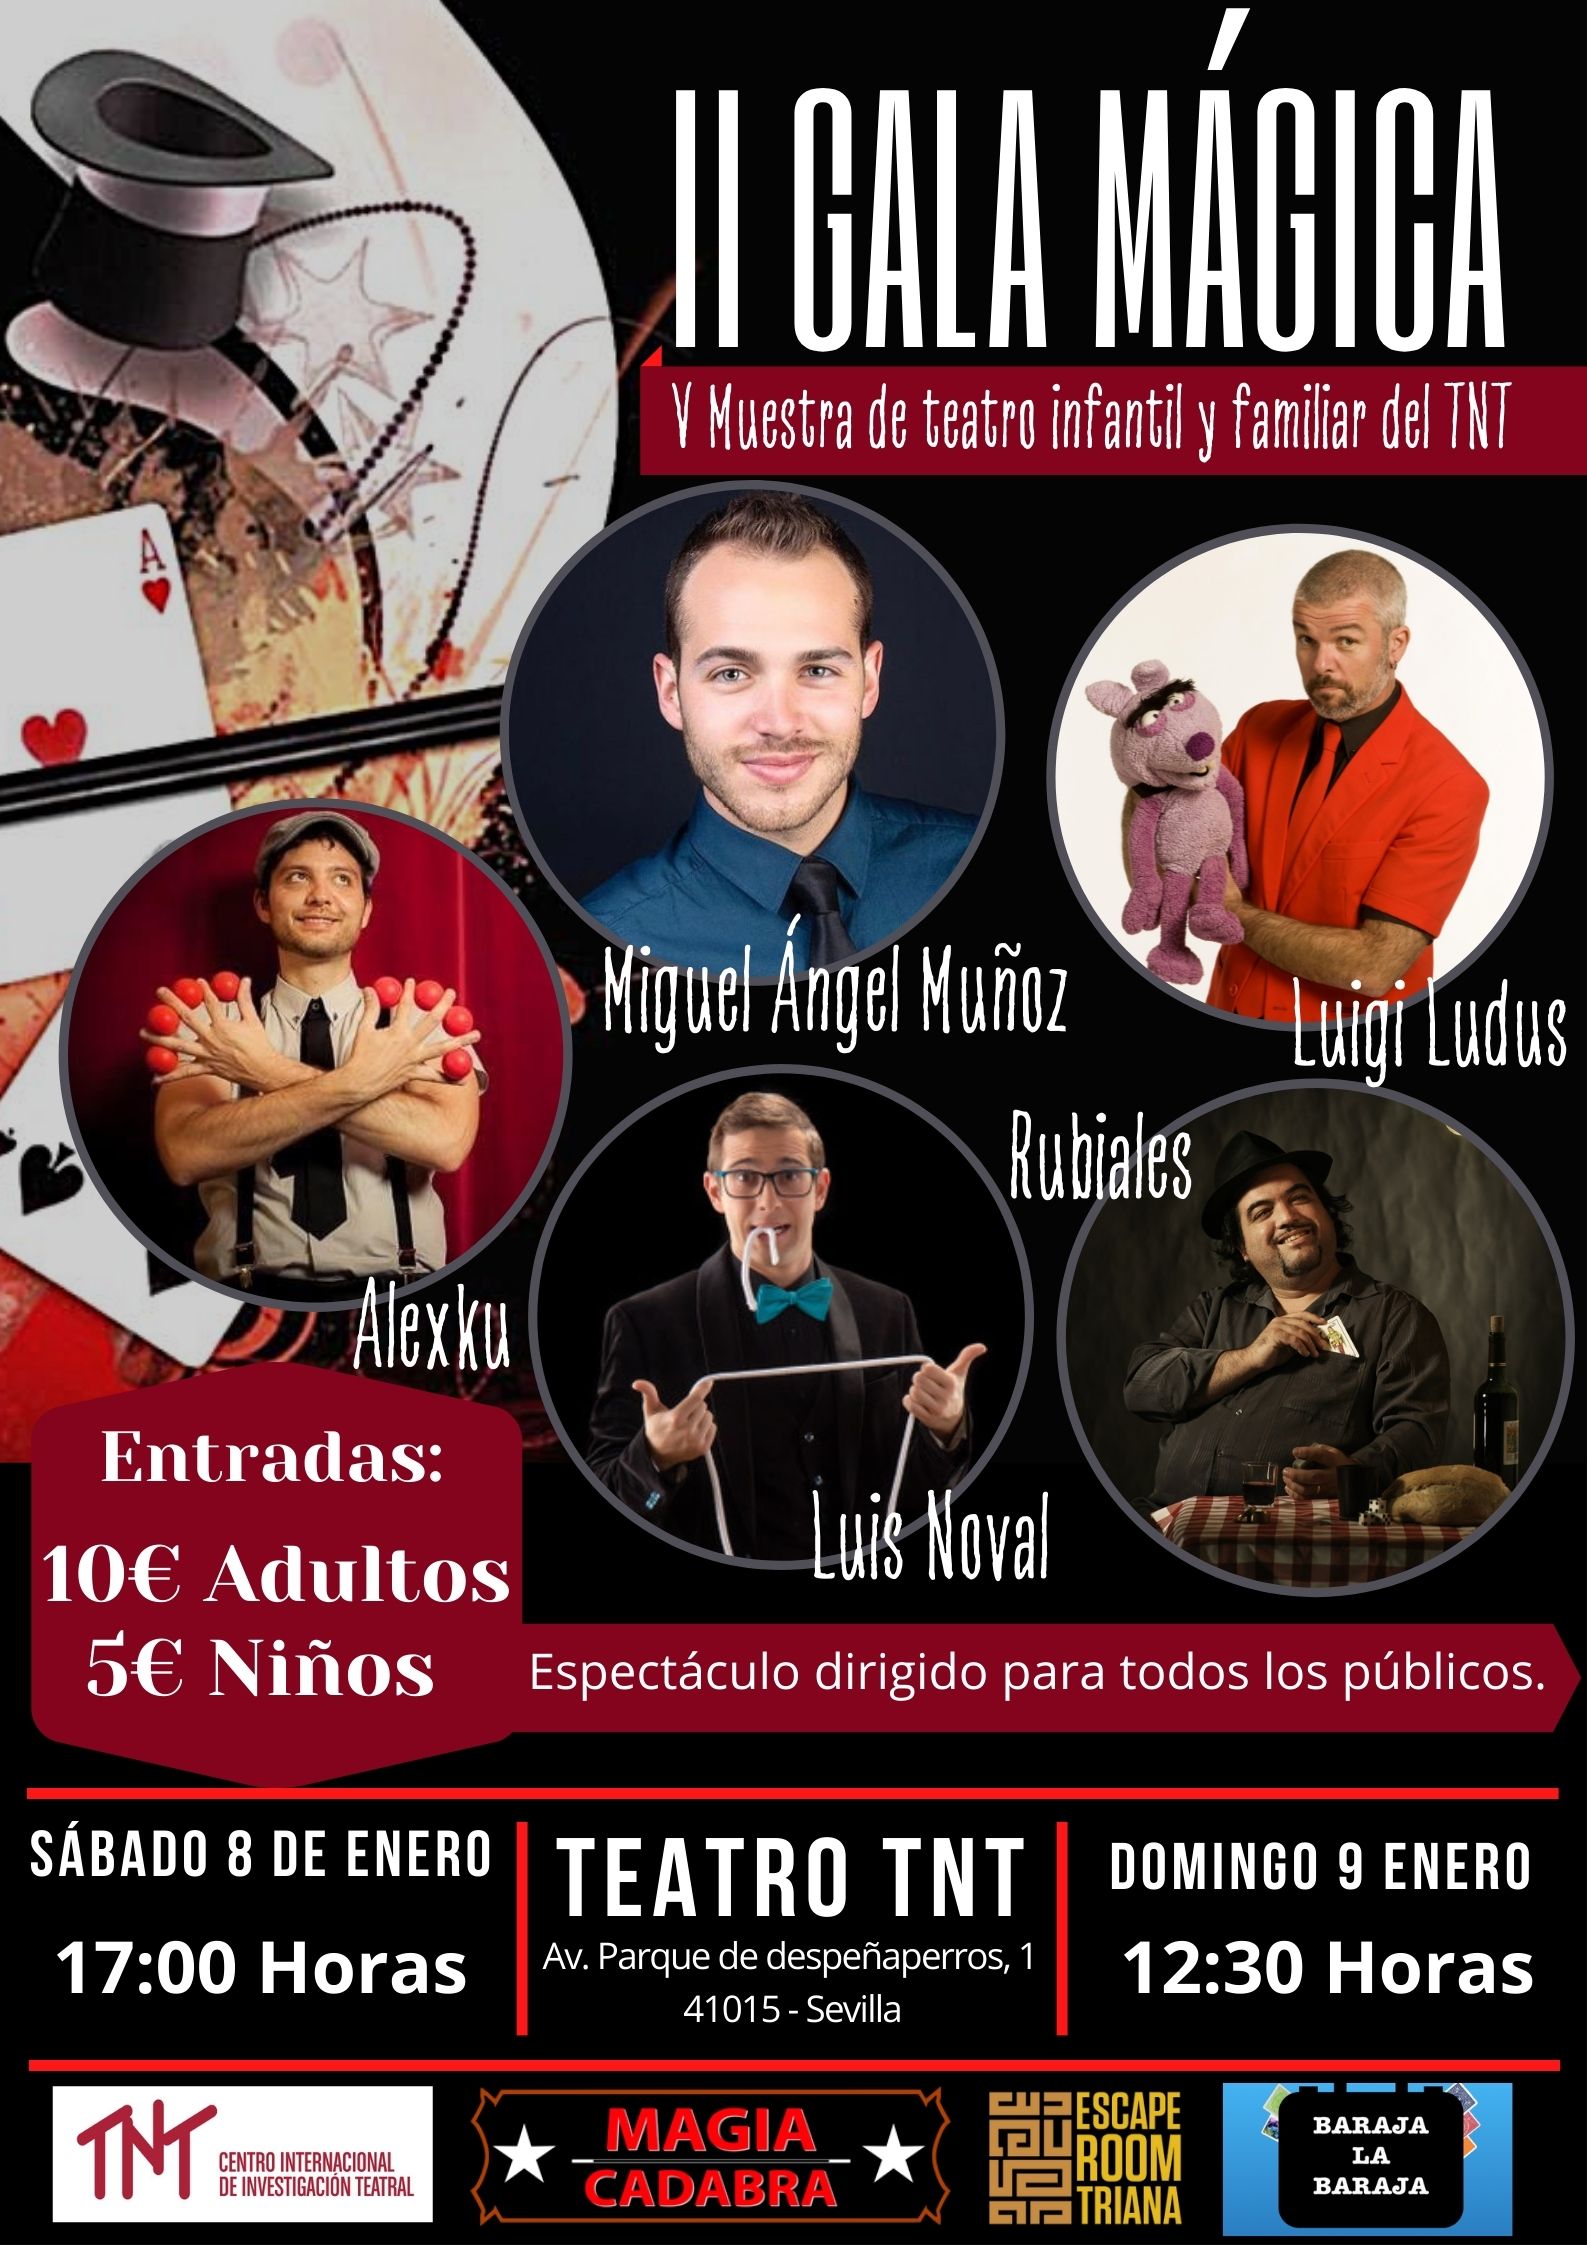 V Muestra Teatro Infantil y Familiar | II Gala Mágica